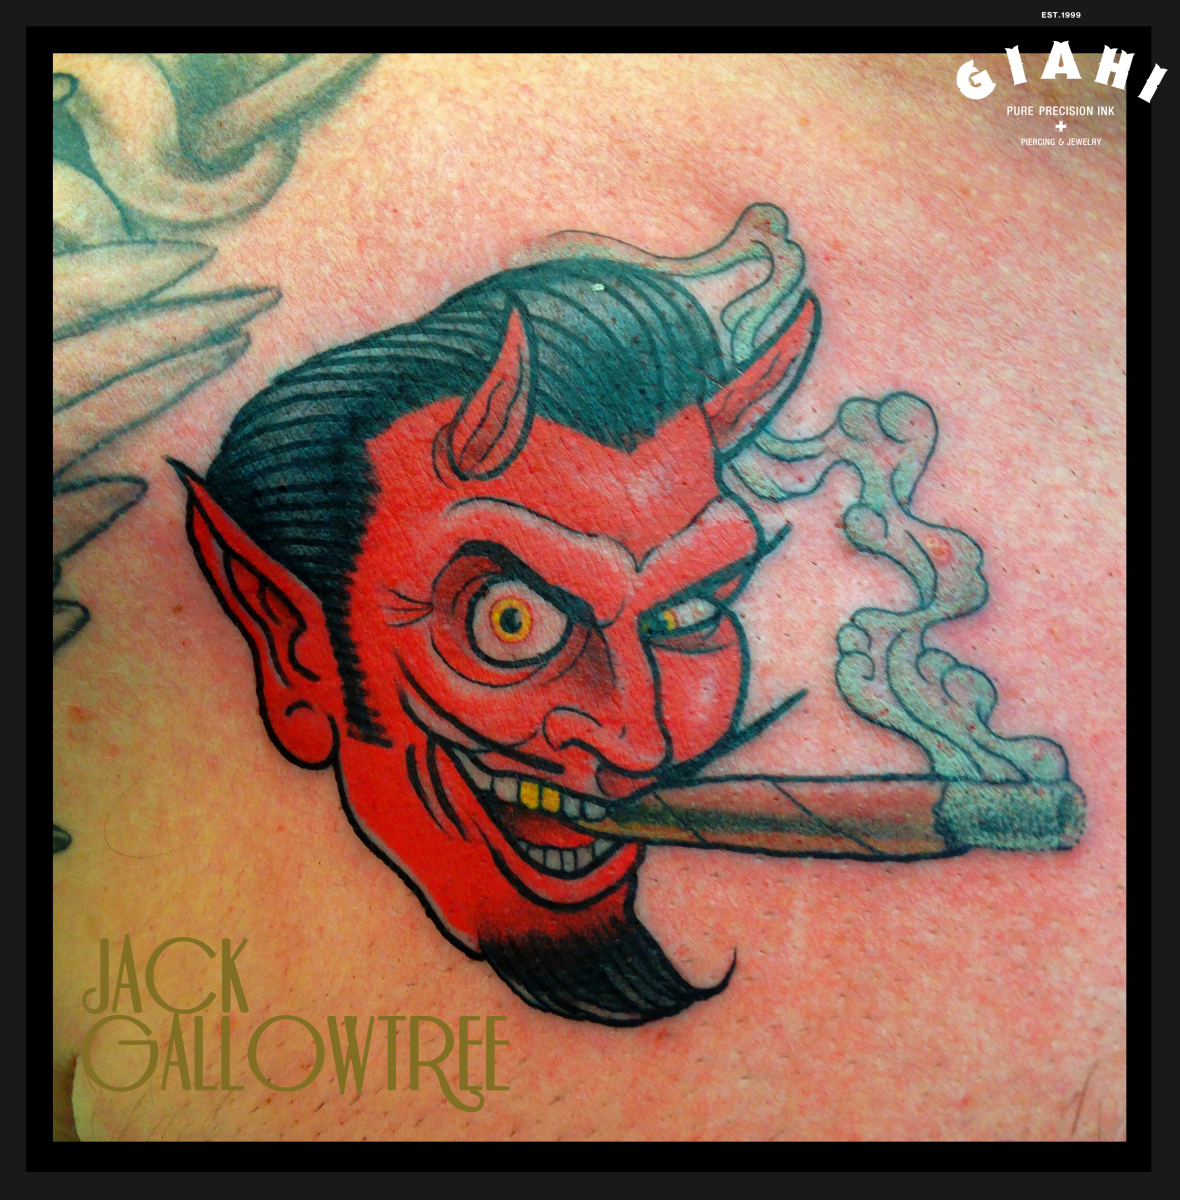 Smoking Devil tattoo by Jack Gallowtree